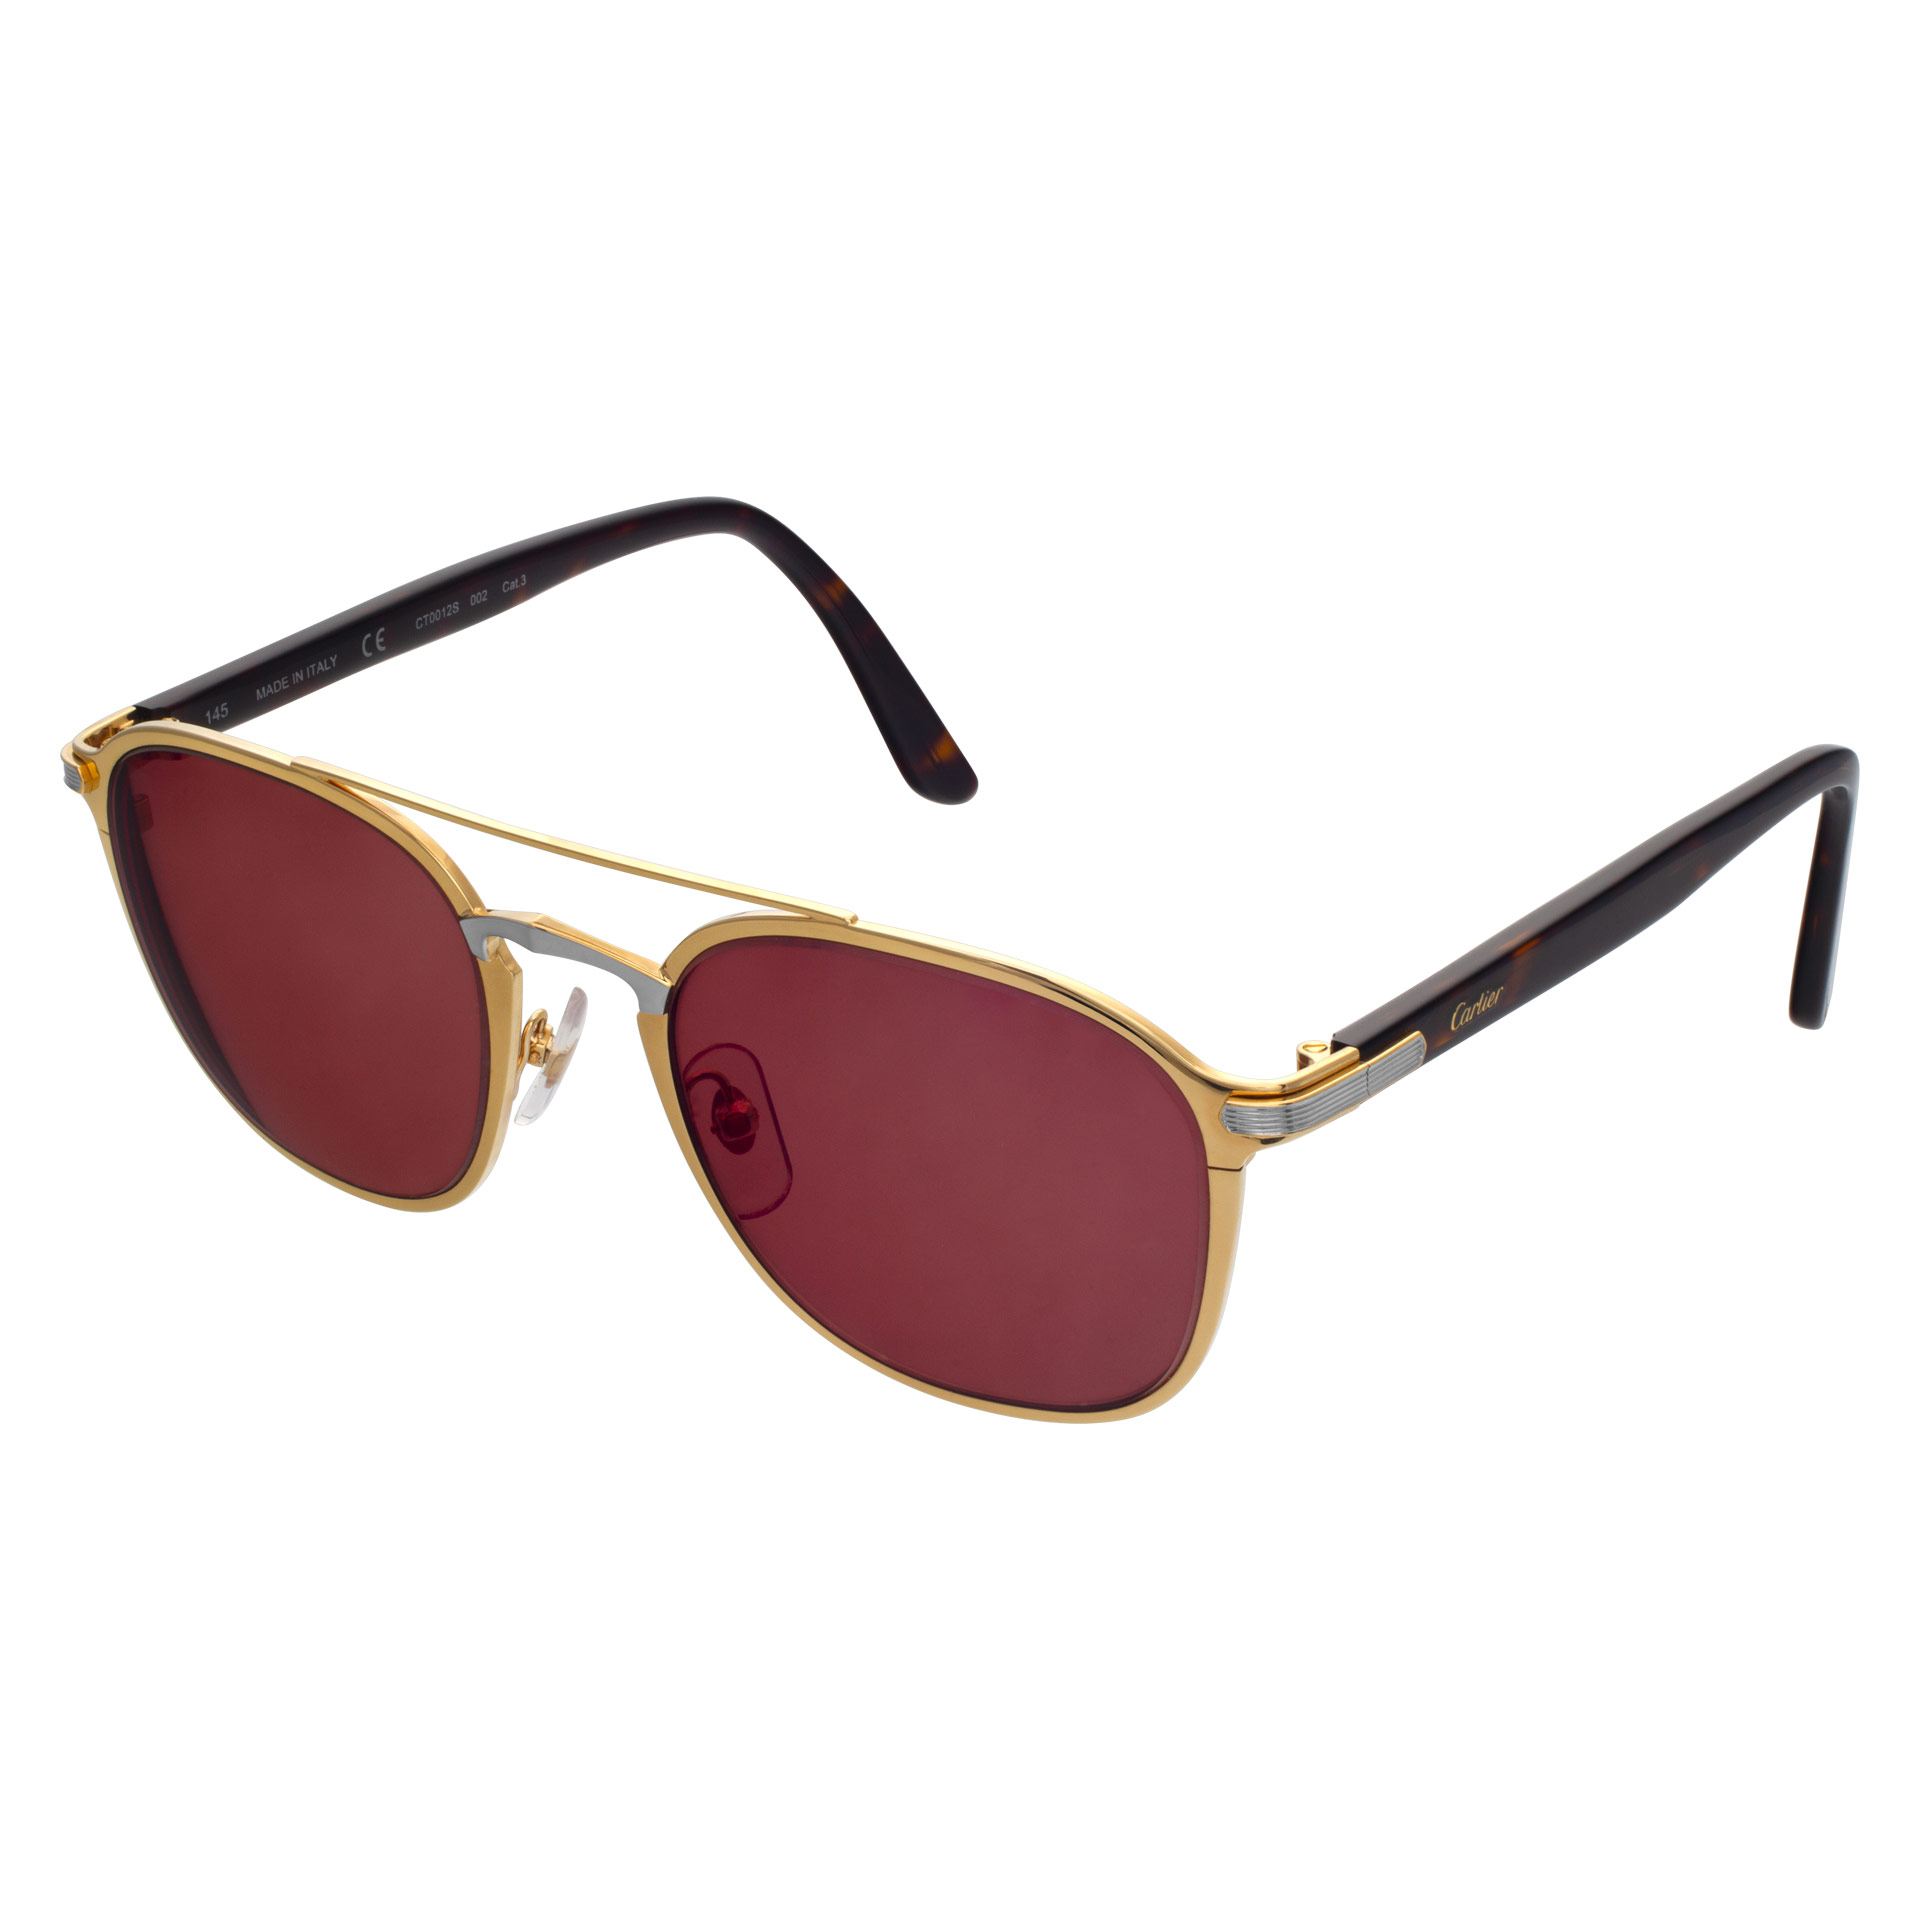 Cartier sunglasses image 4